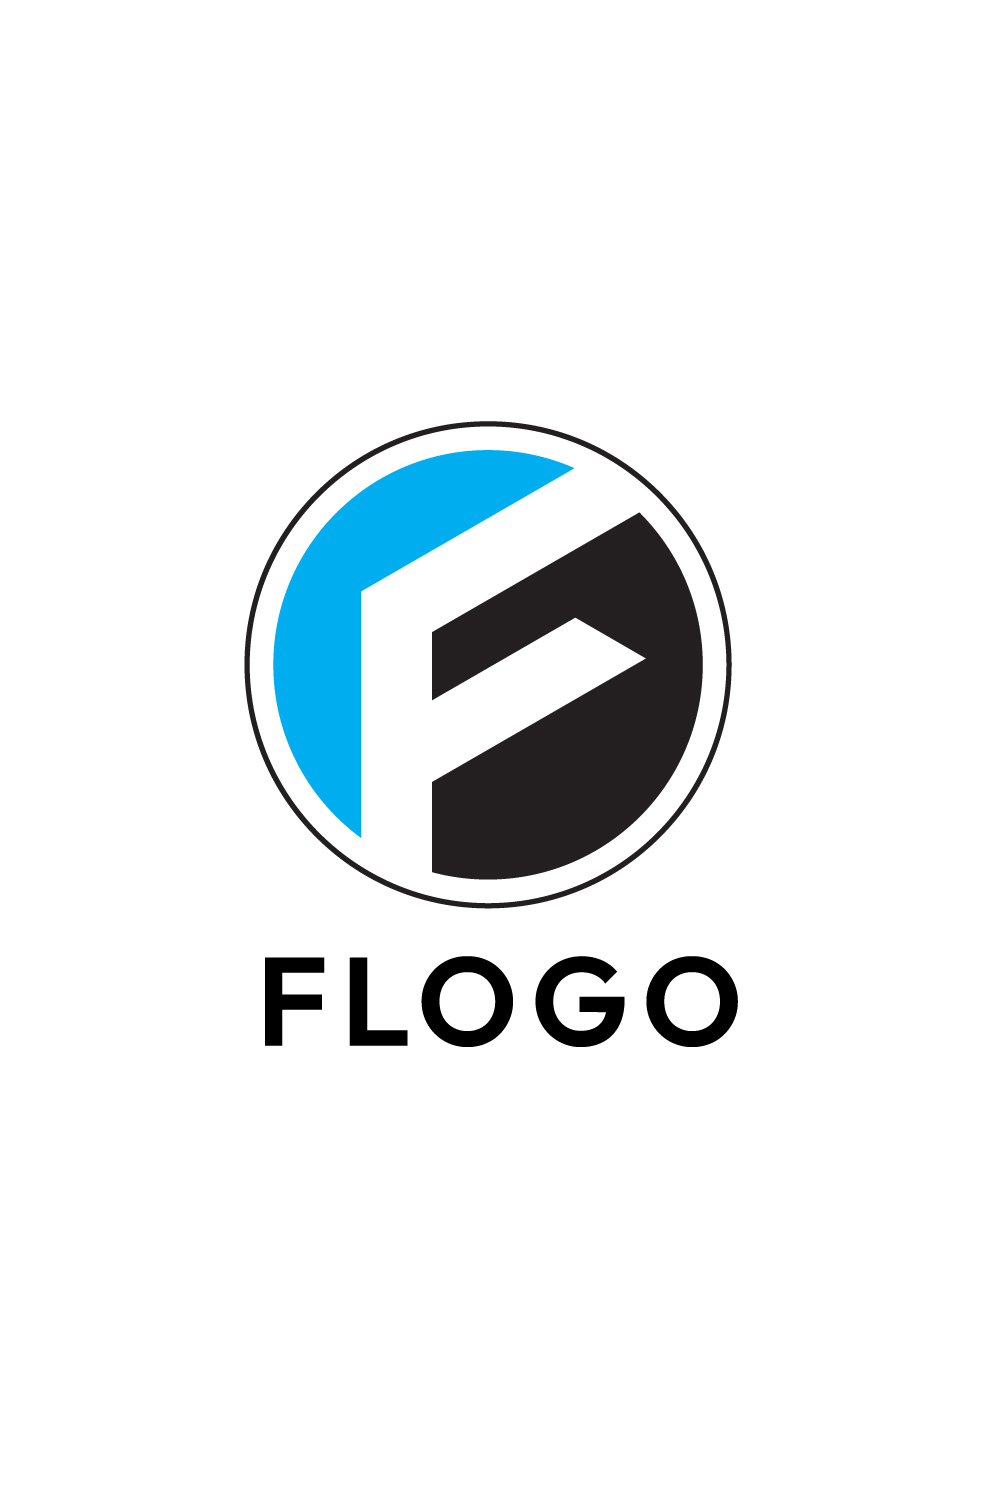 F Logo Design Bundle: Elevate Your Brand with Versatile Focused Designs" pinterest preview image.